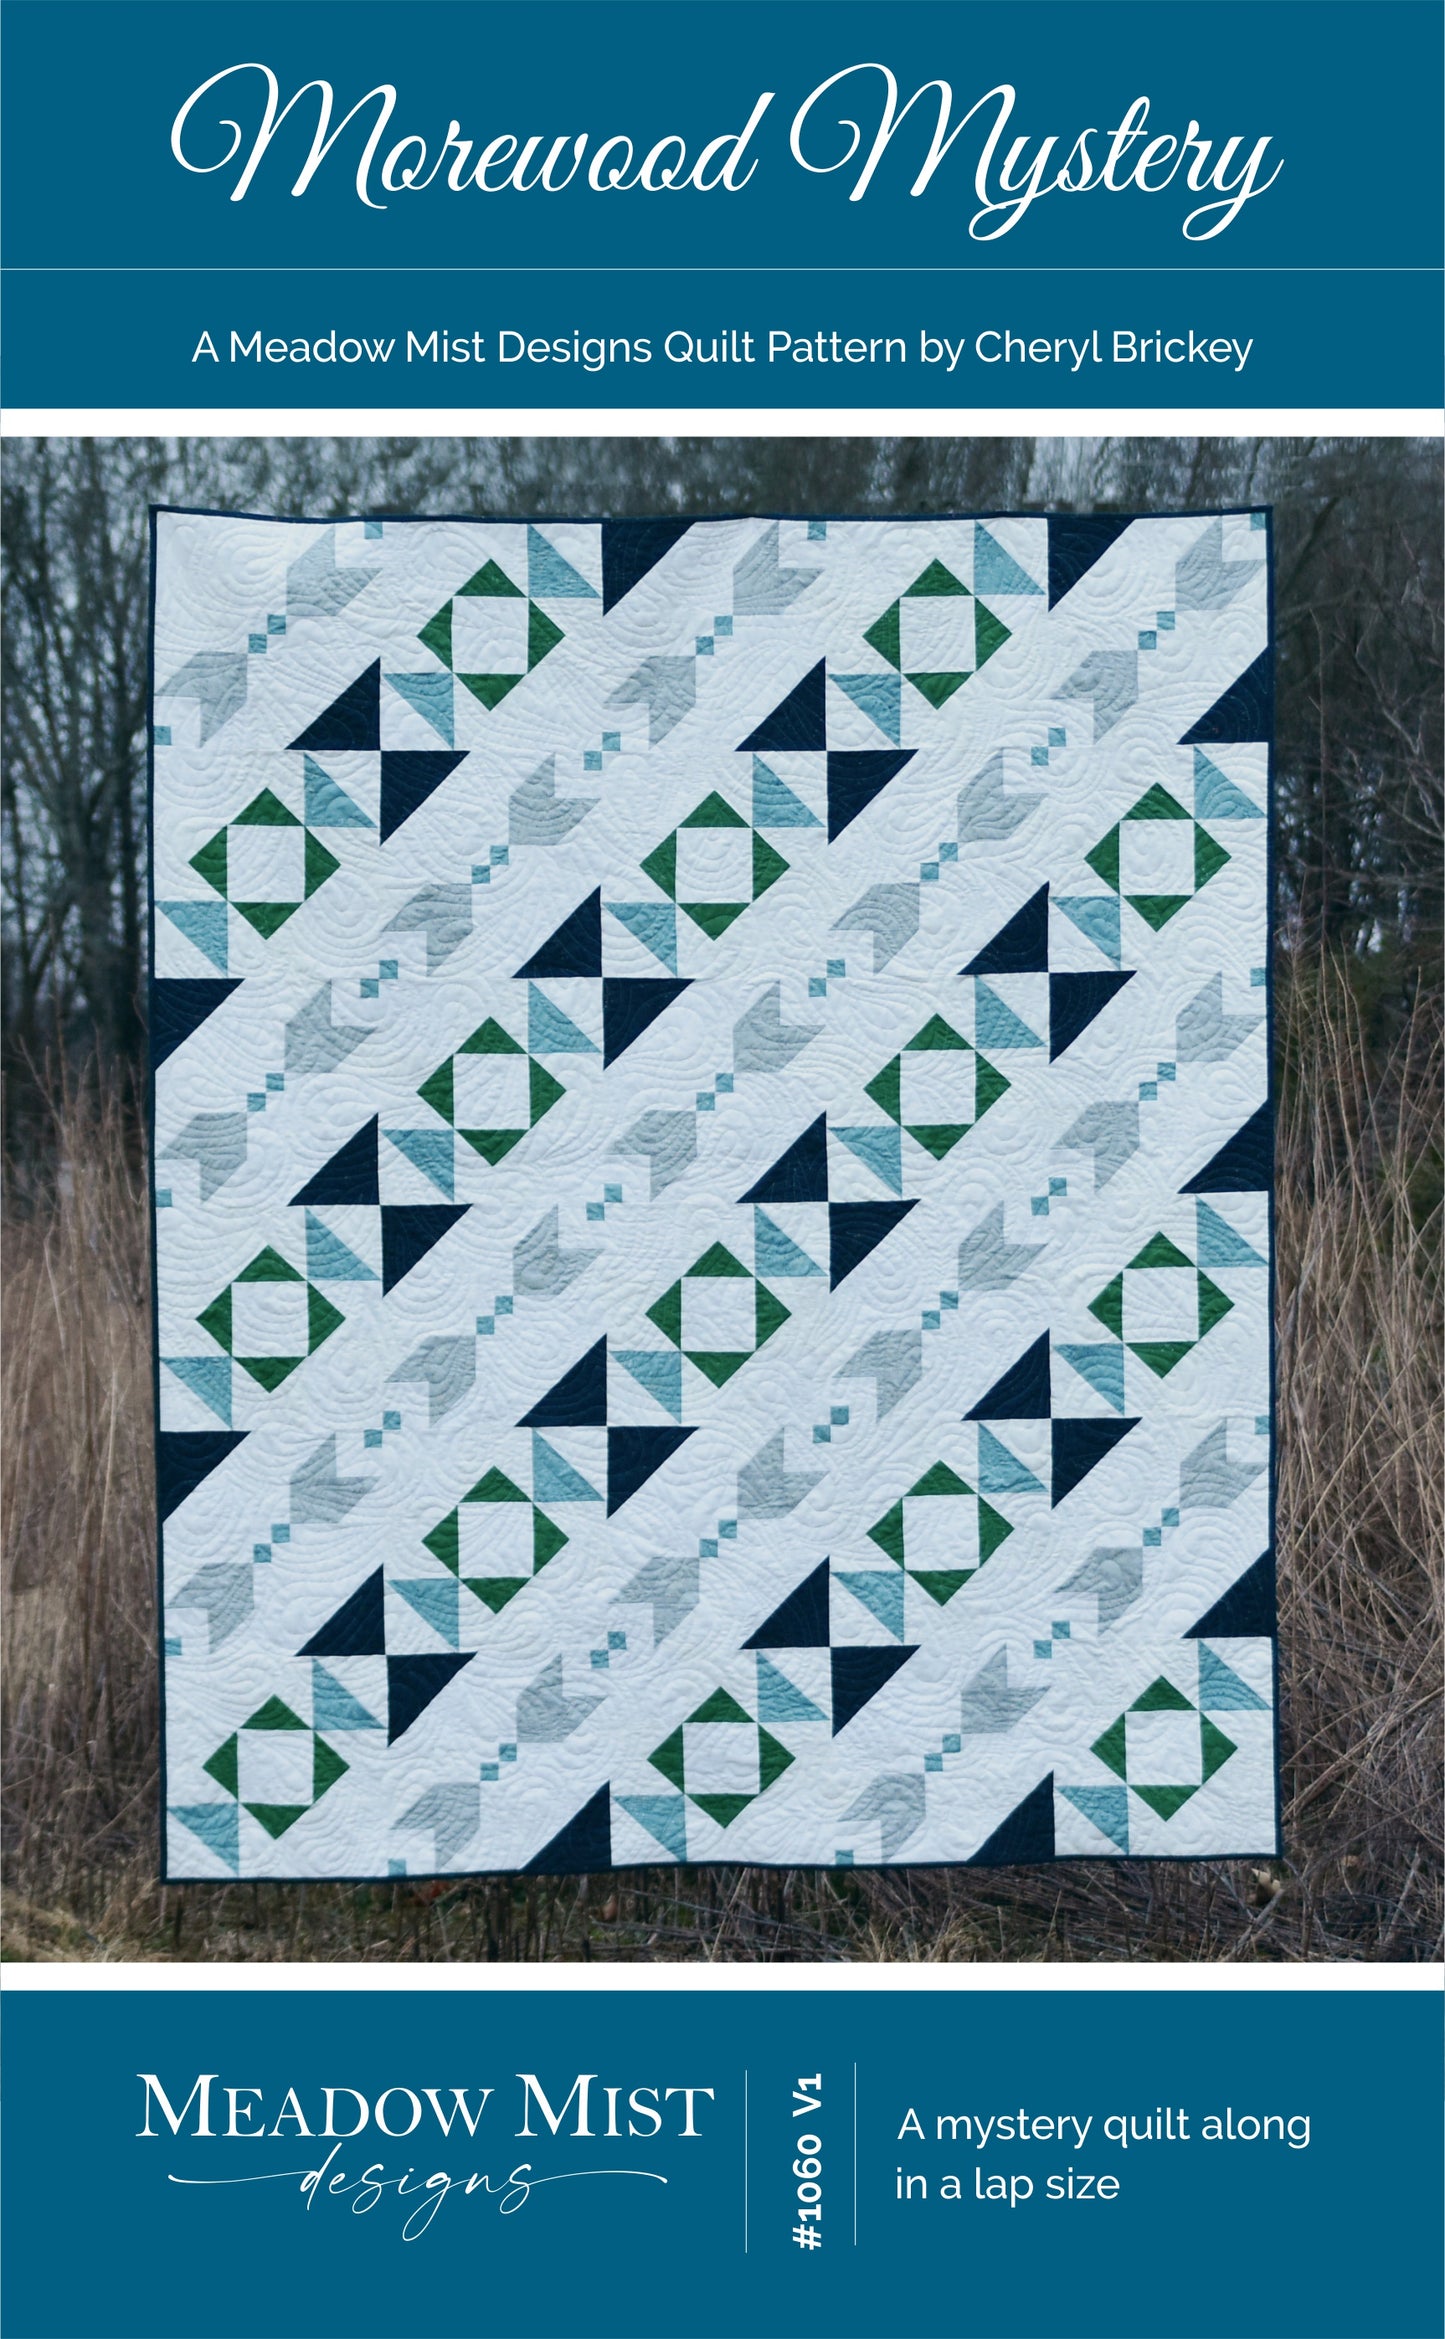 Full Mystery Quilt Bundle - Eight Digital Patterns